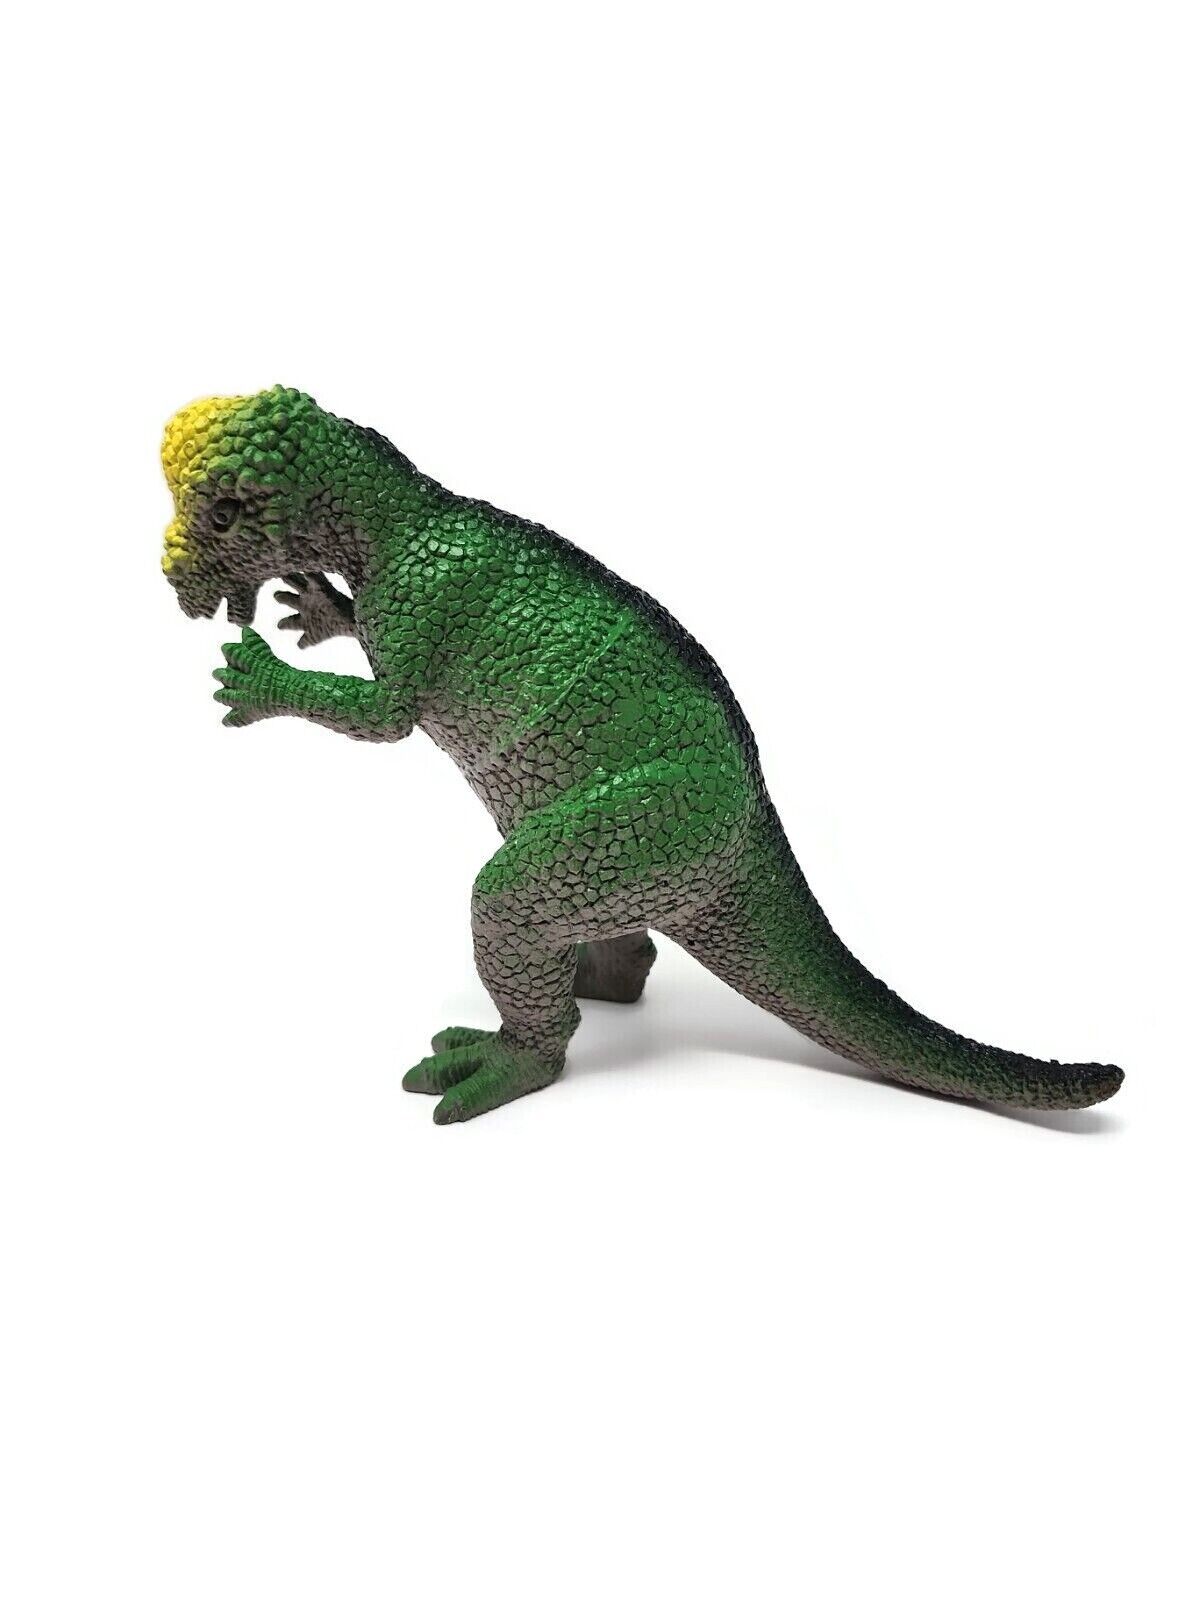 1 Boley  8” Pachycephalosaurus Dinosaur  Figure Prehistoric Brand New